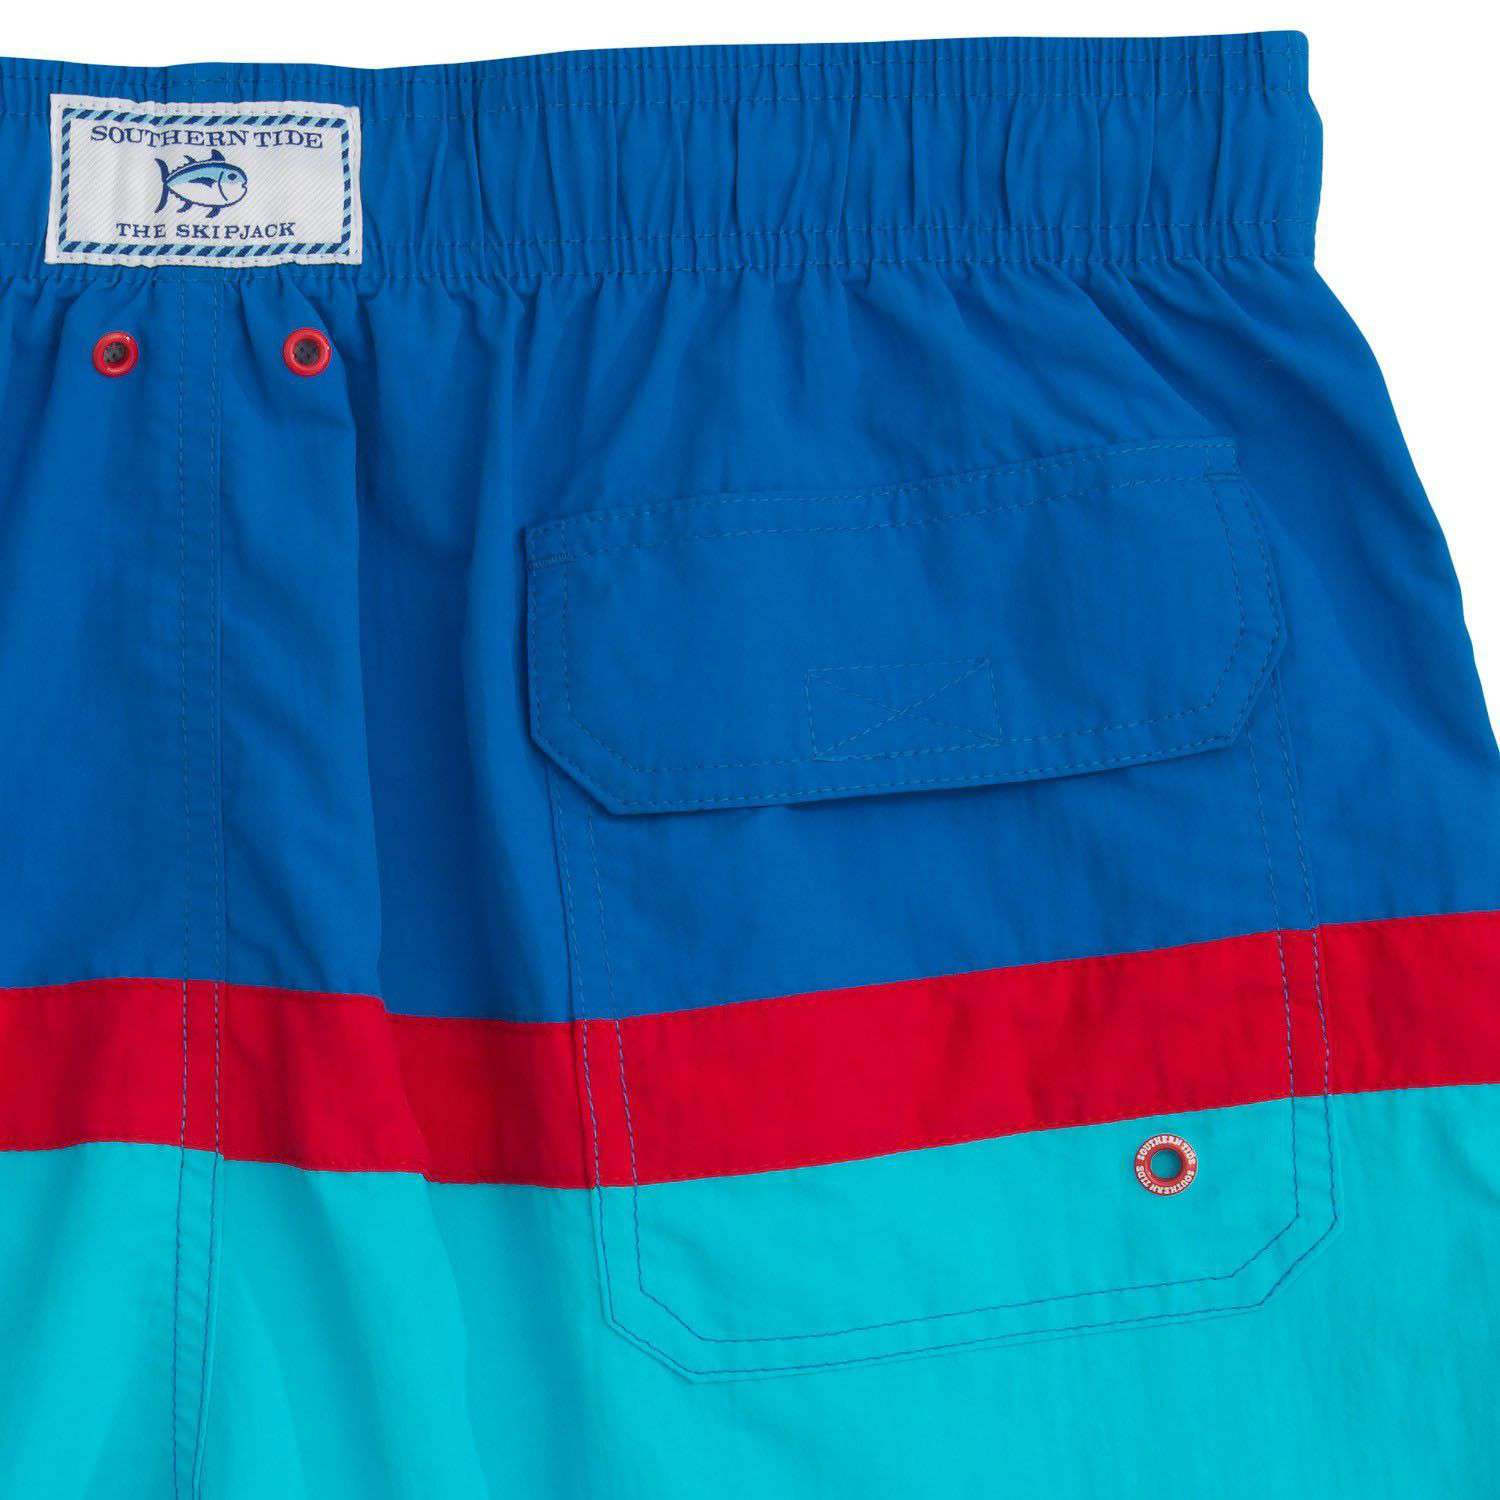 Southern Shirt Color Run Swim Shorts Color Run / SM